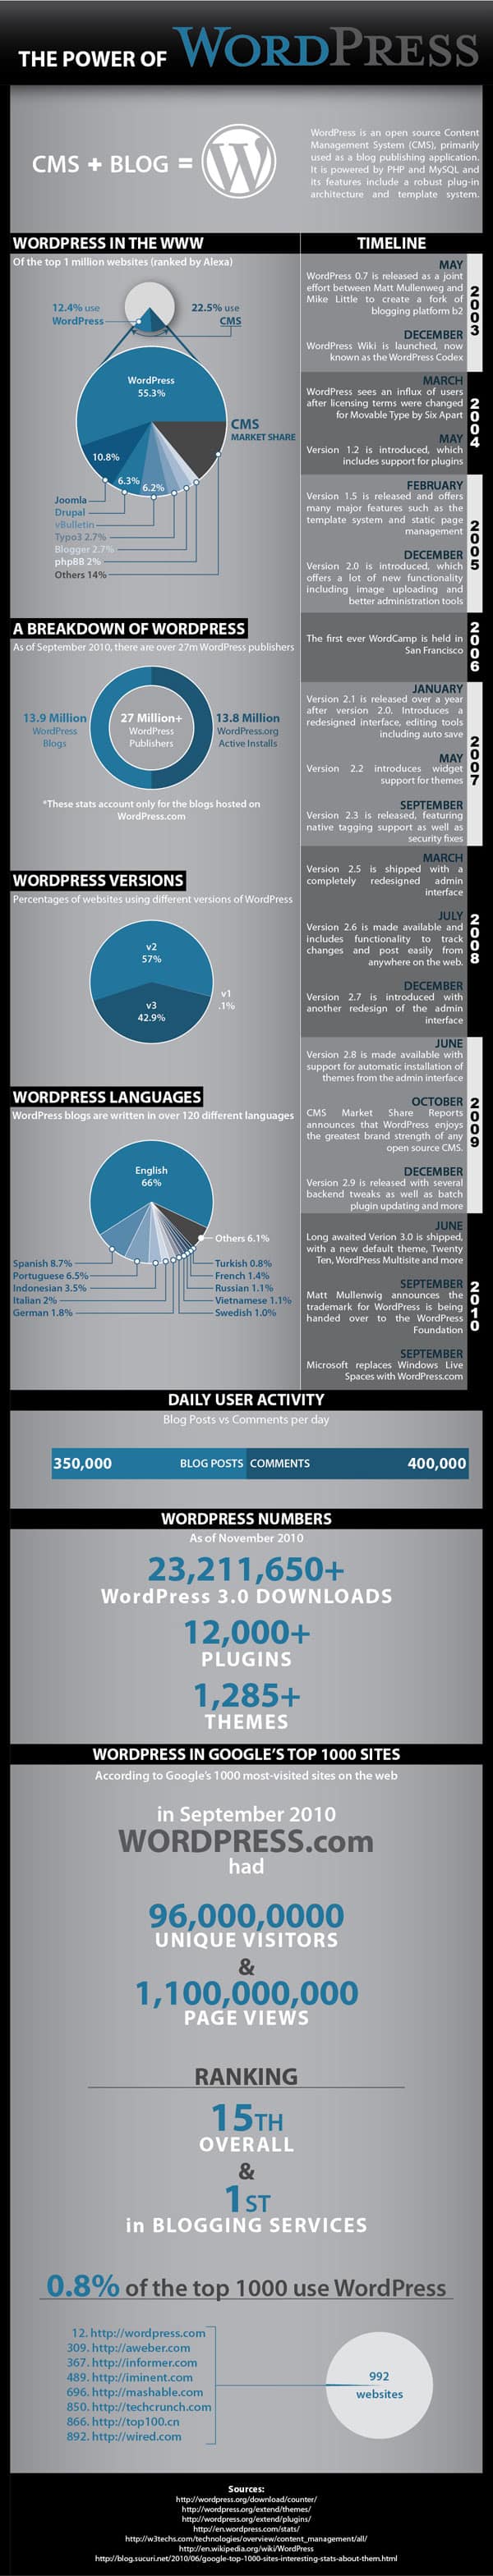 Infographic – The Power of WordPress